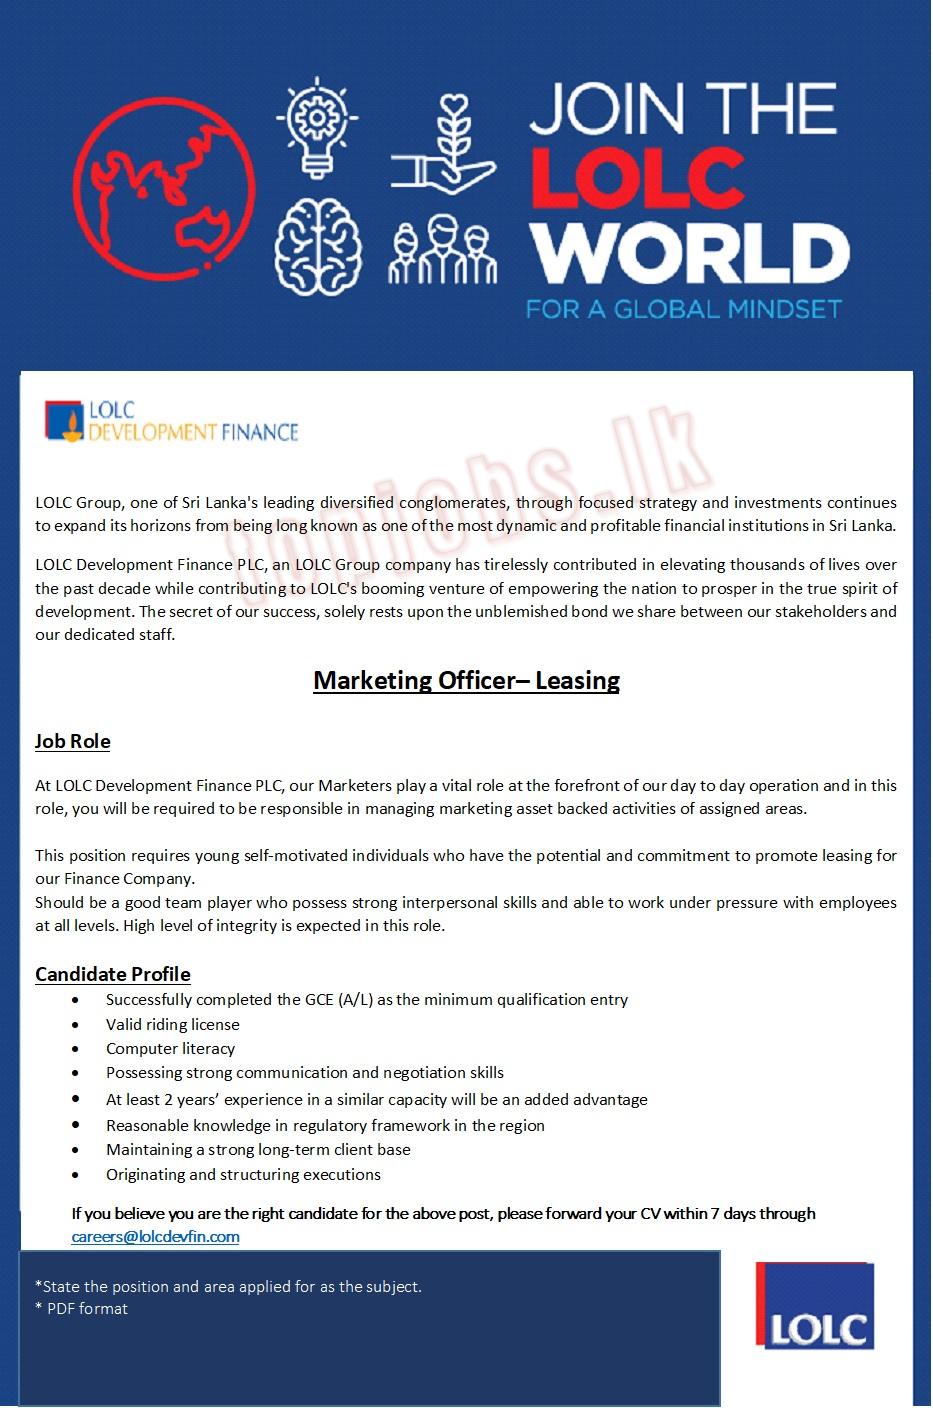 Marketing Officer of Leasing Vacancies in LOLC Development Finance